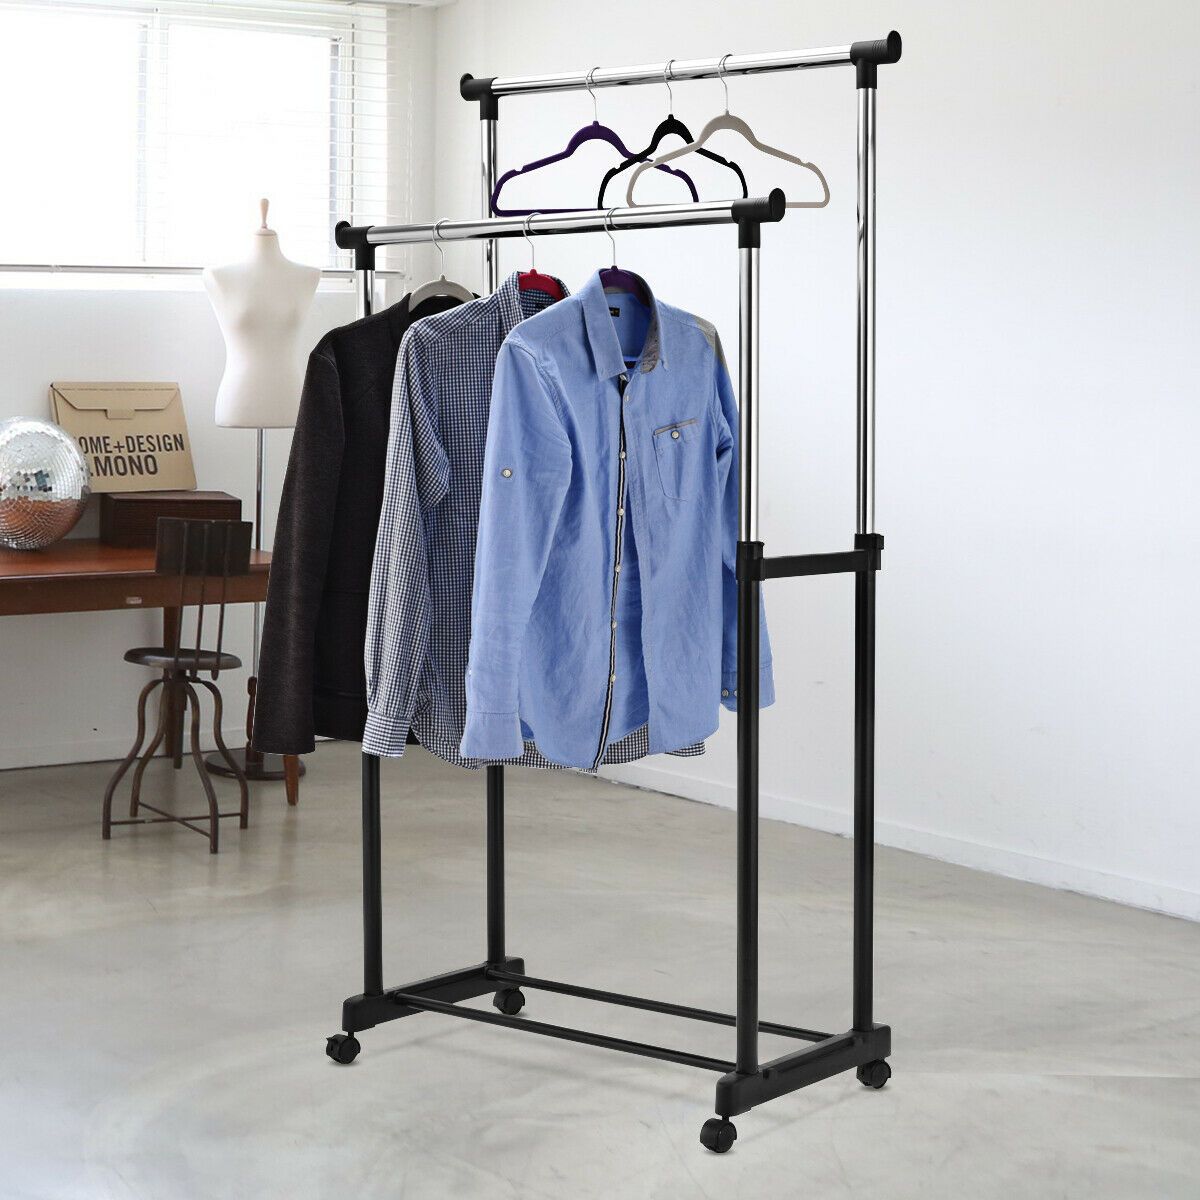 Adjustable Double Rail Garment Rack